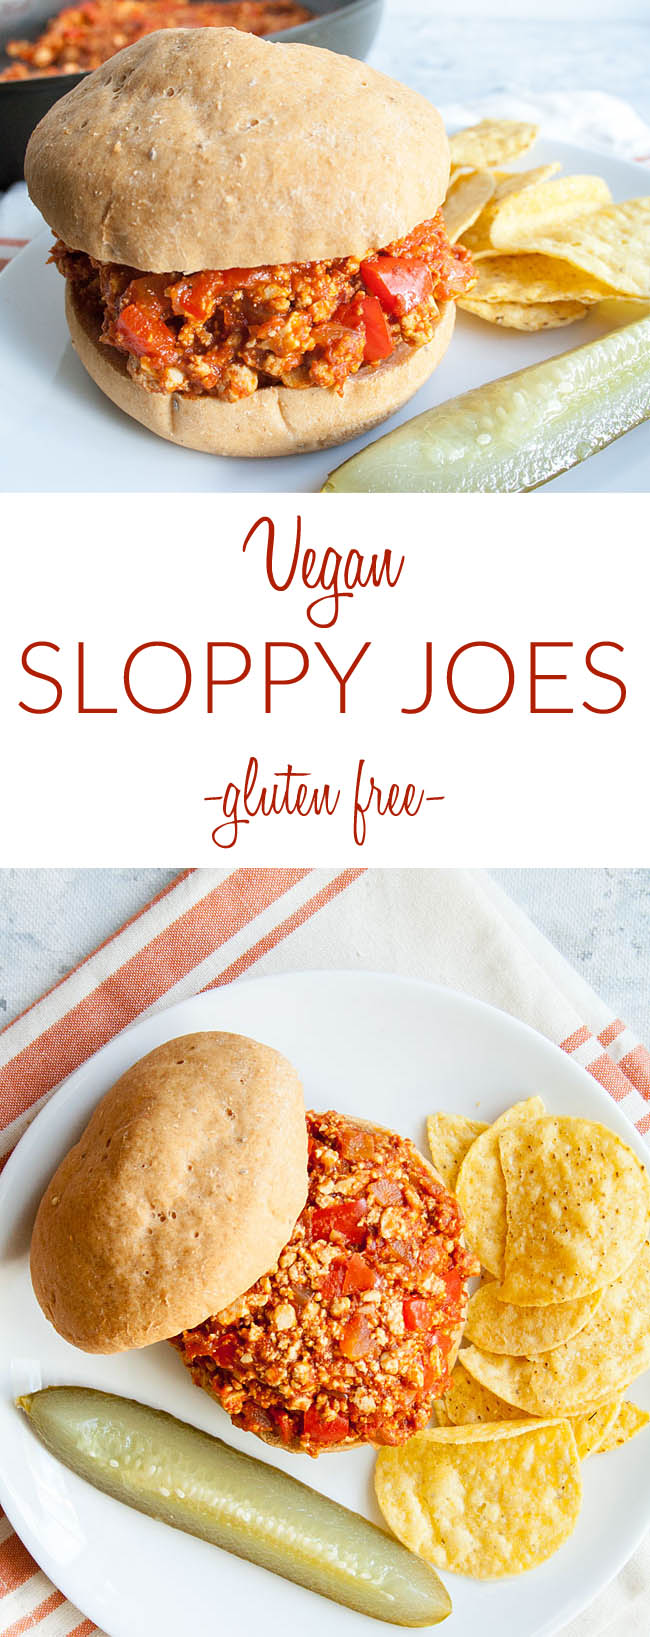 Vegan Sloppy Joes collage photo with text.